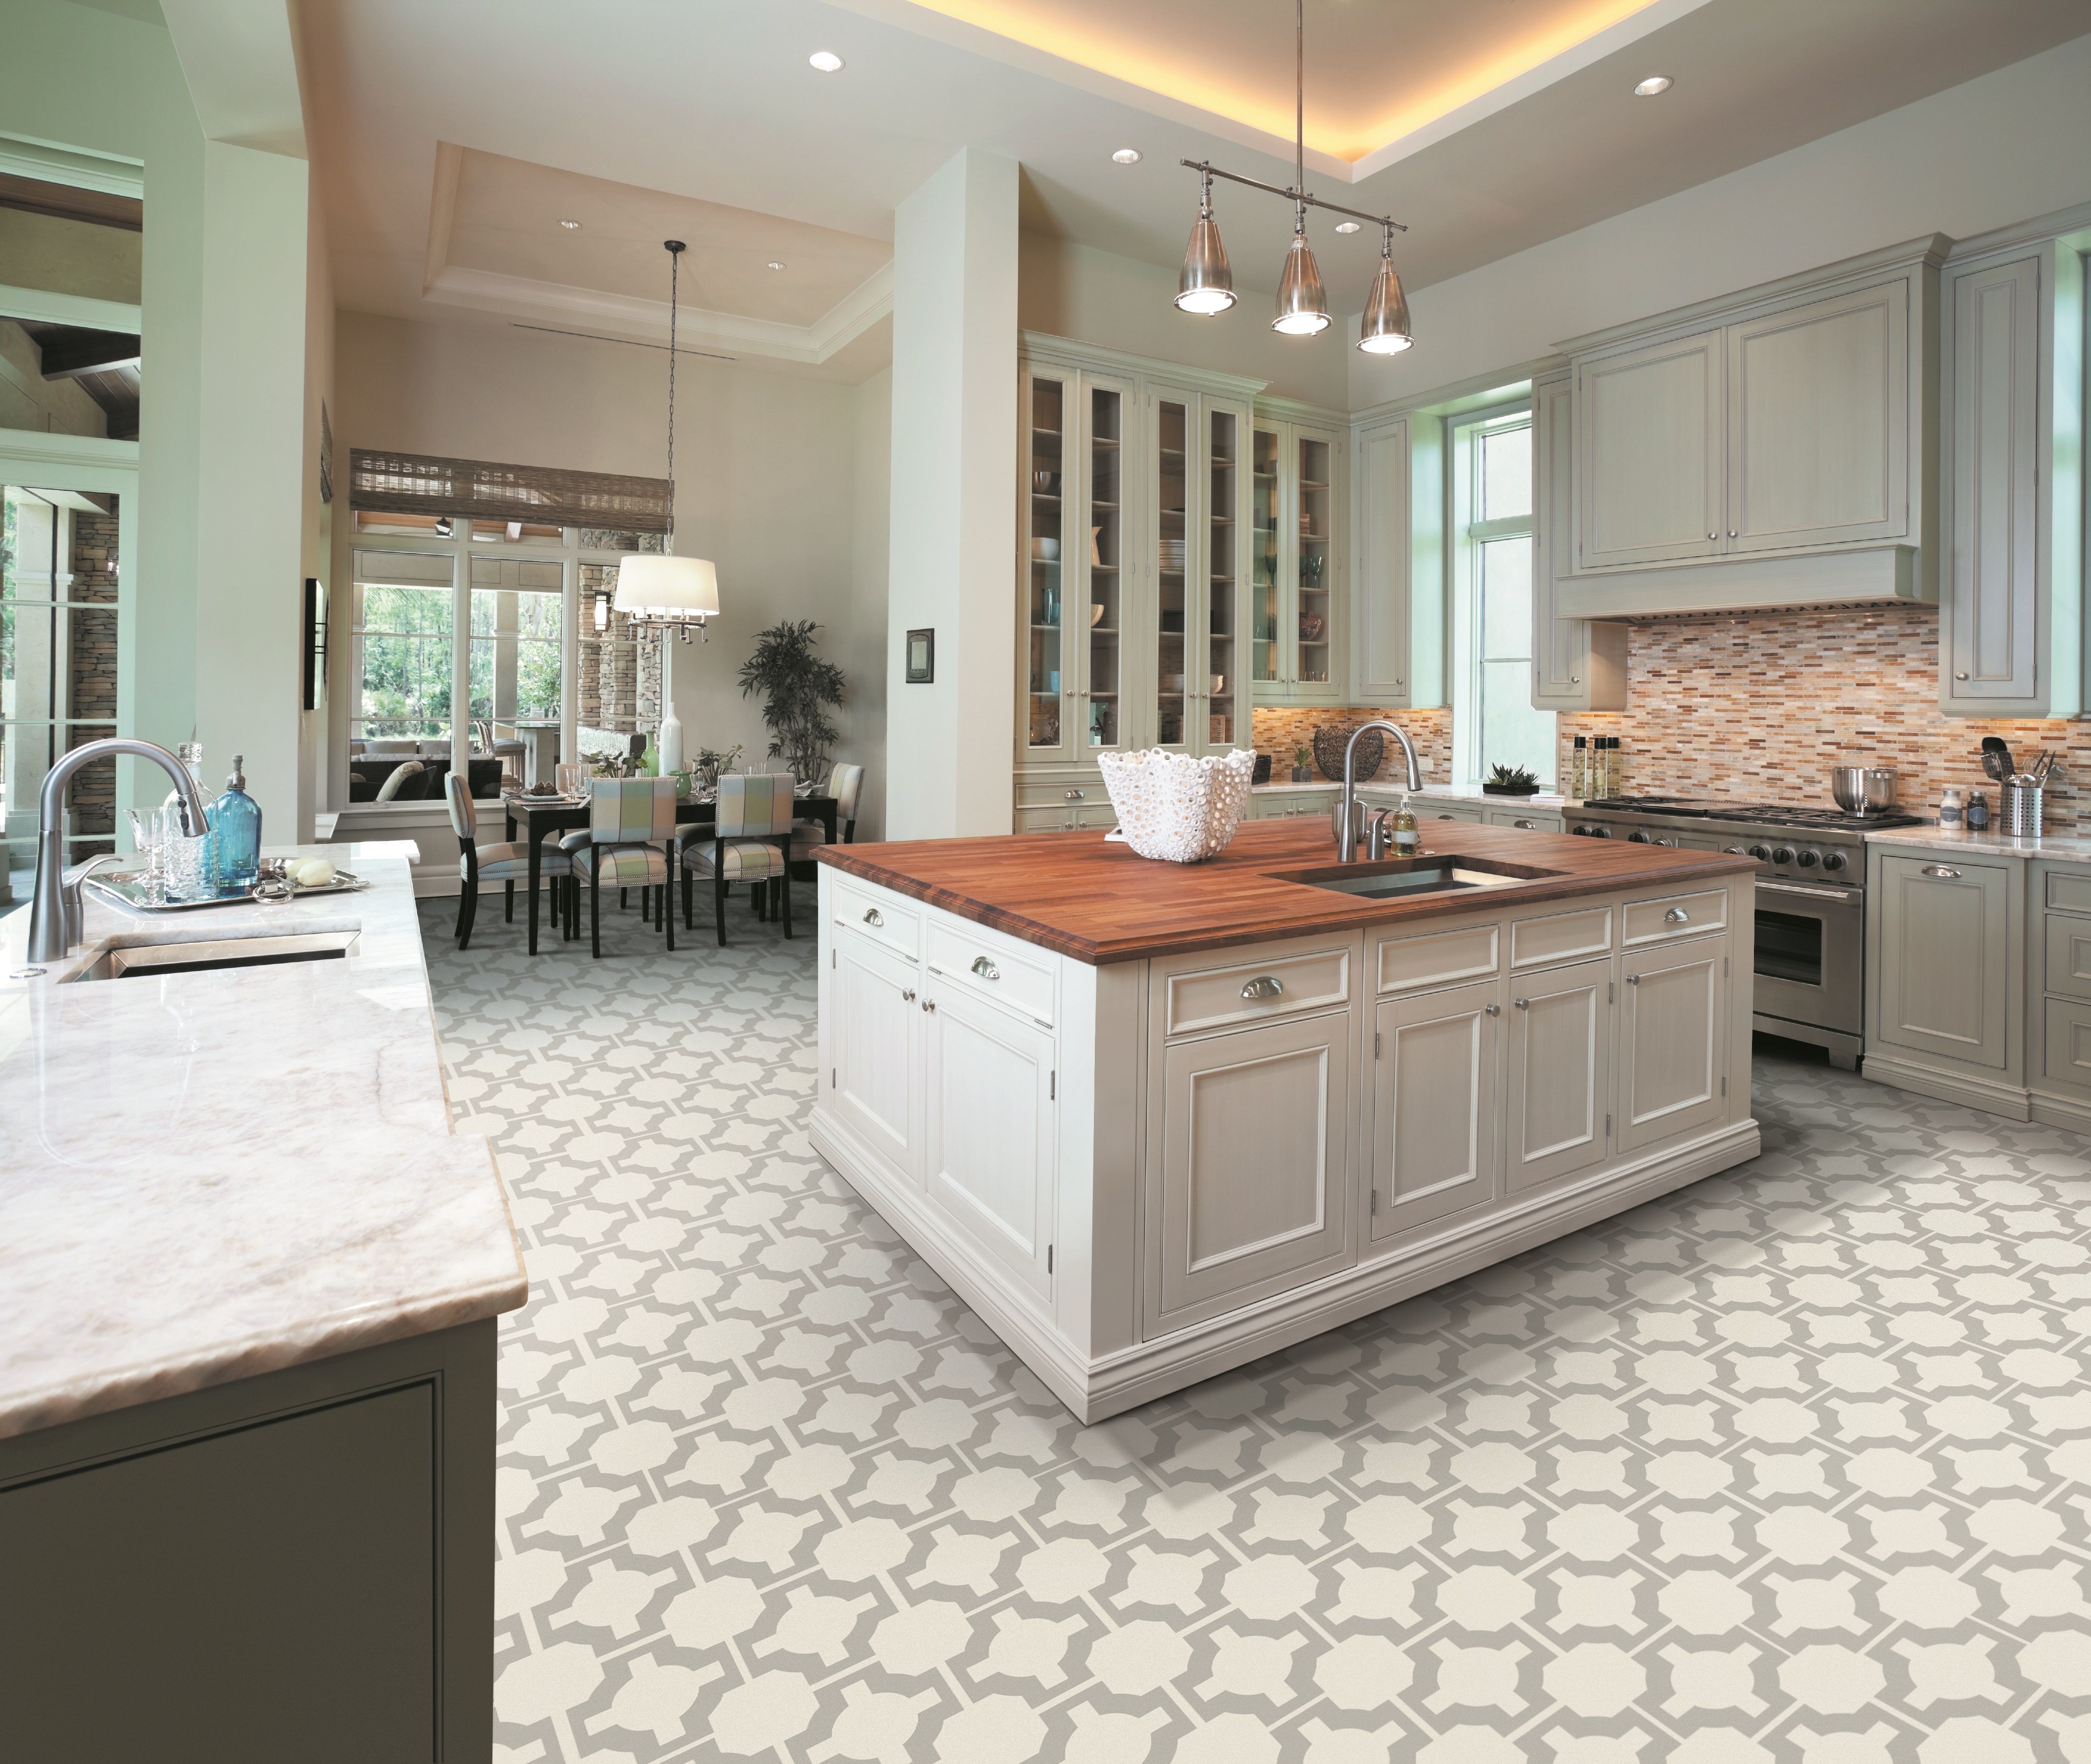 Kitchen with Vinyl flooring | Budget Flooring, Inc.